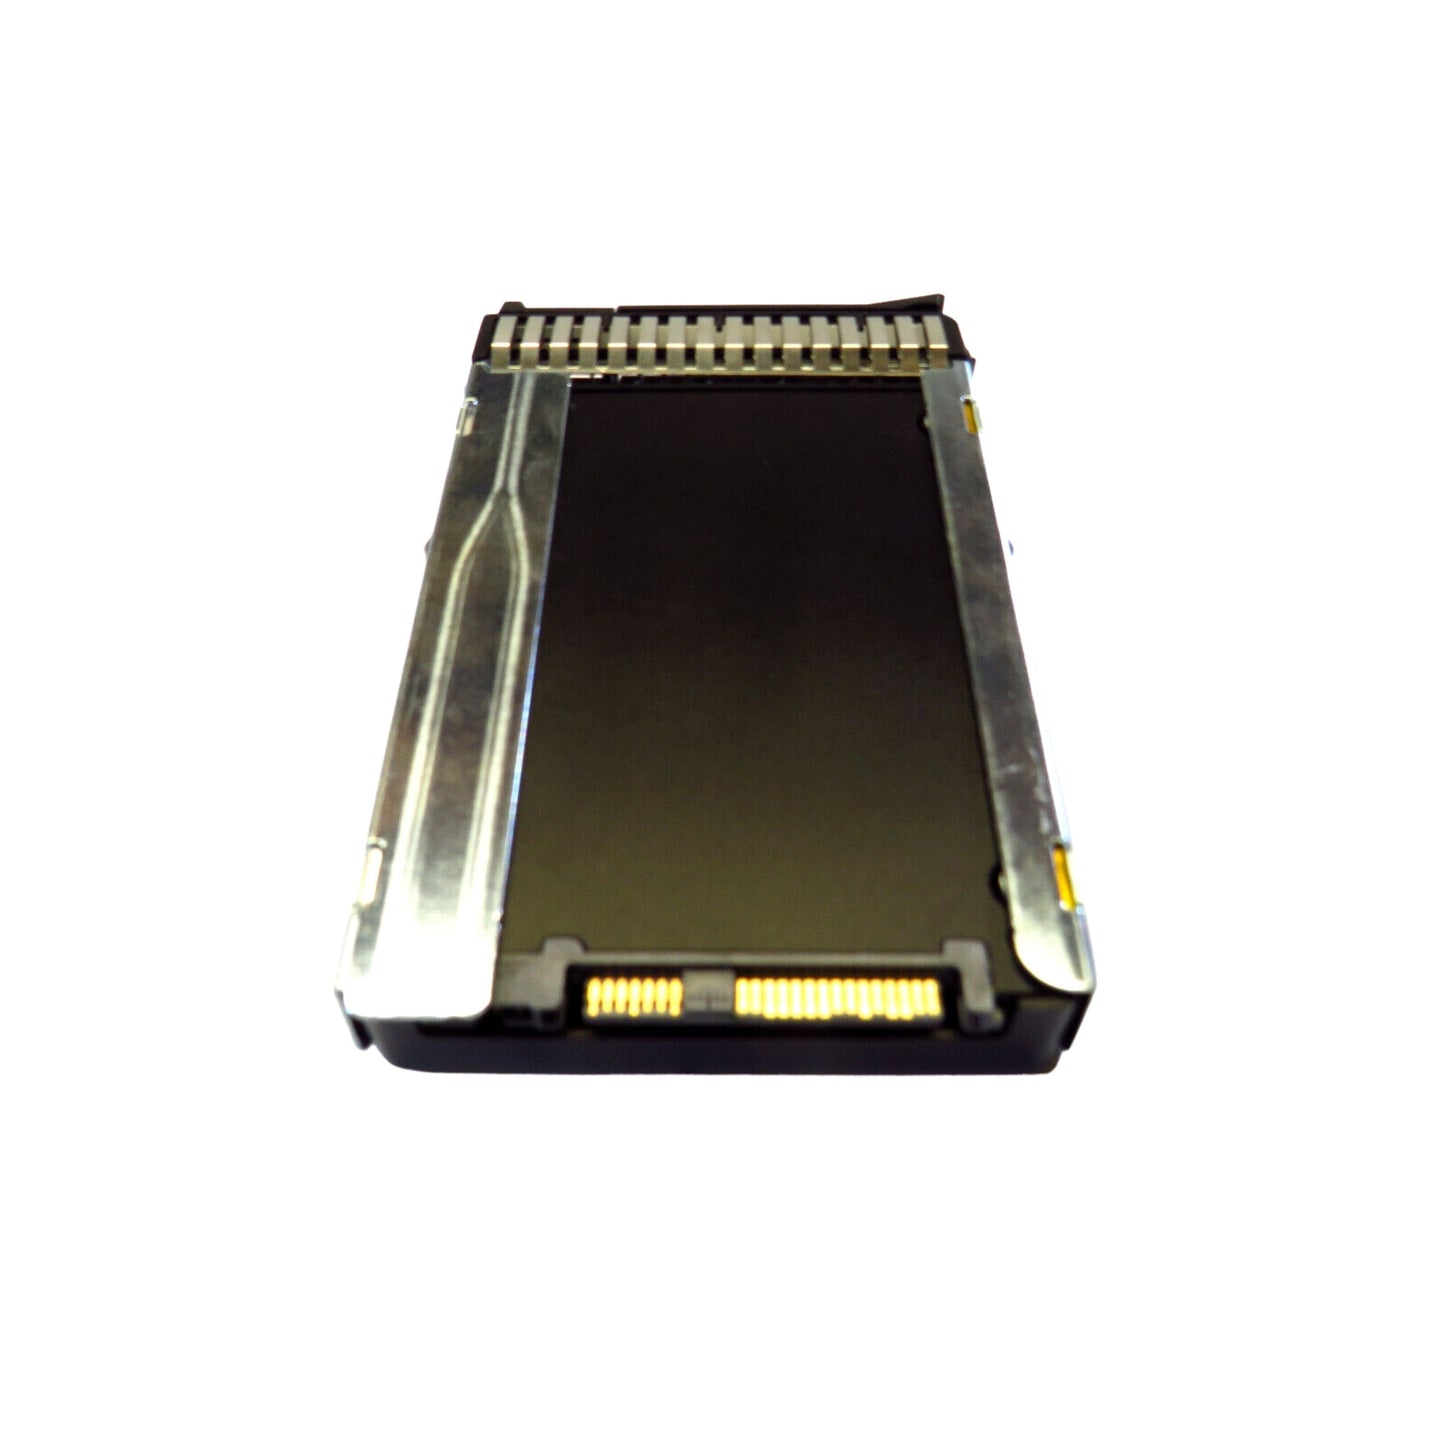 Lenovo 01GV822 7N47A00118 800GB 2.5" SAS 12Gbps SSD Solid State Drive (Refurbished)